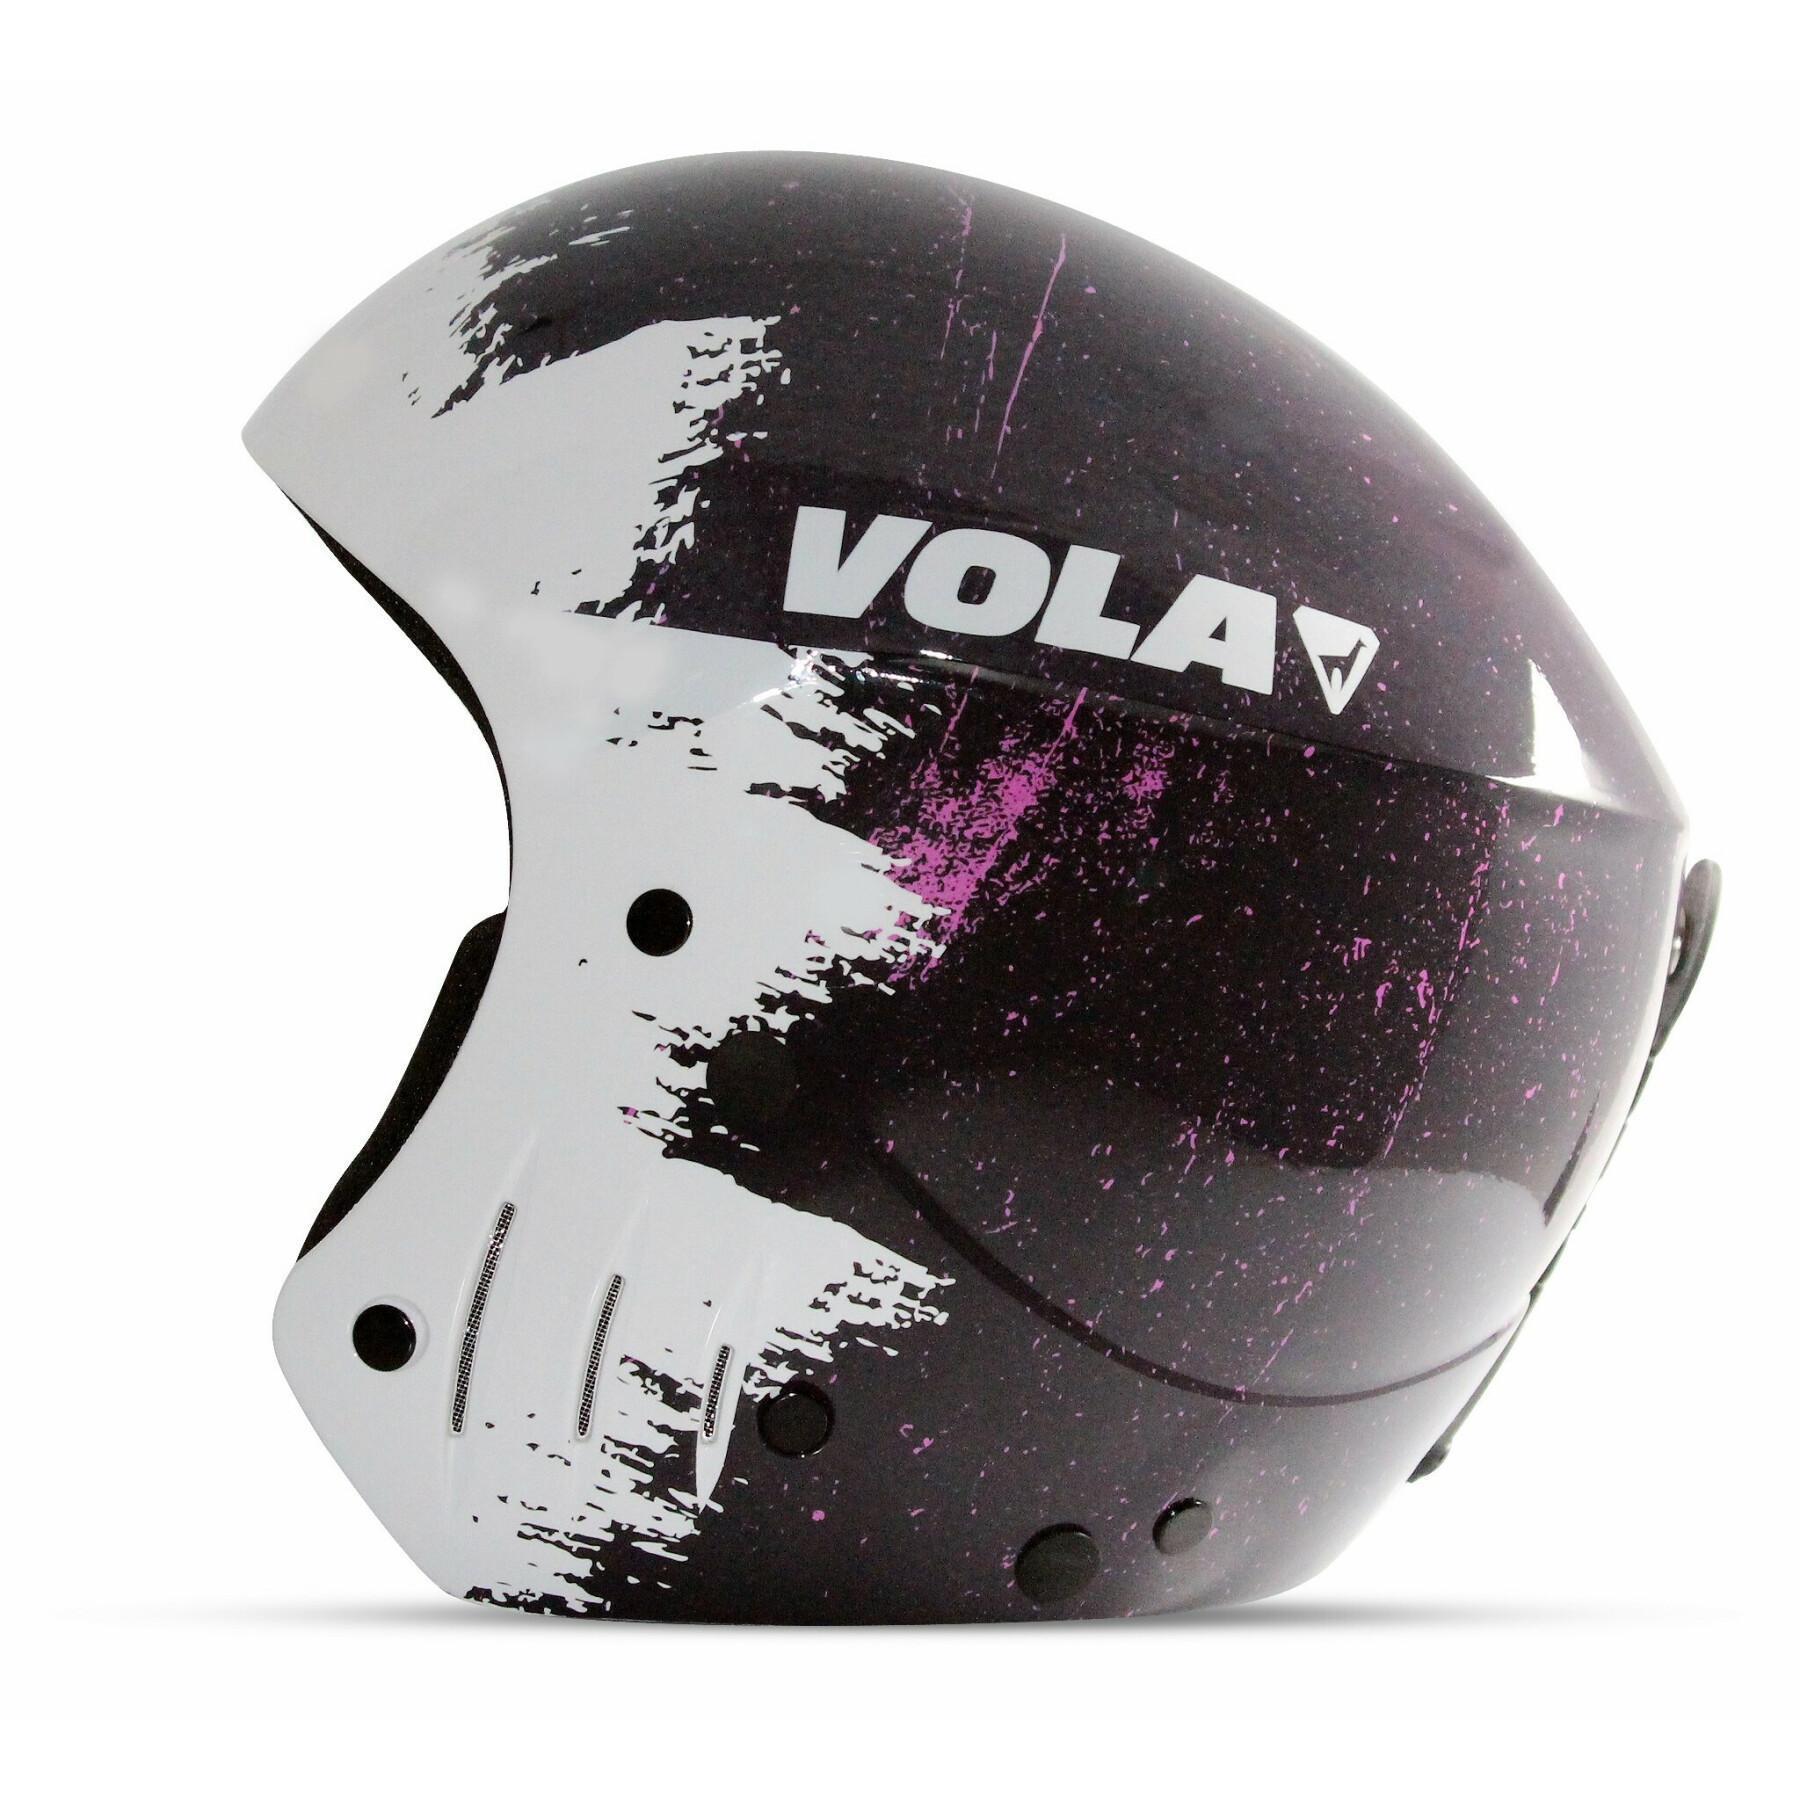 Ski helmet Vola Fis Tore